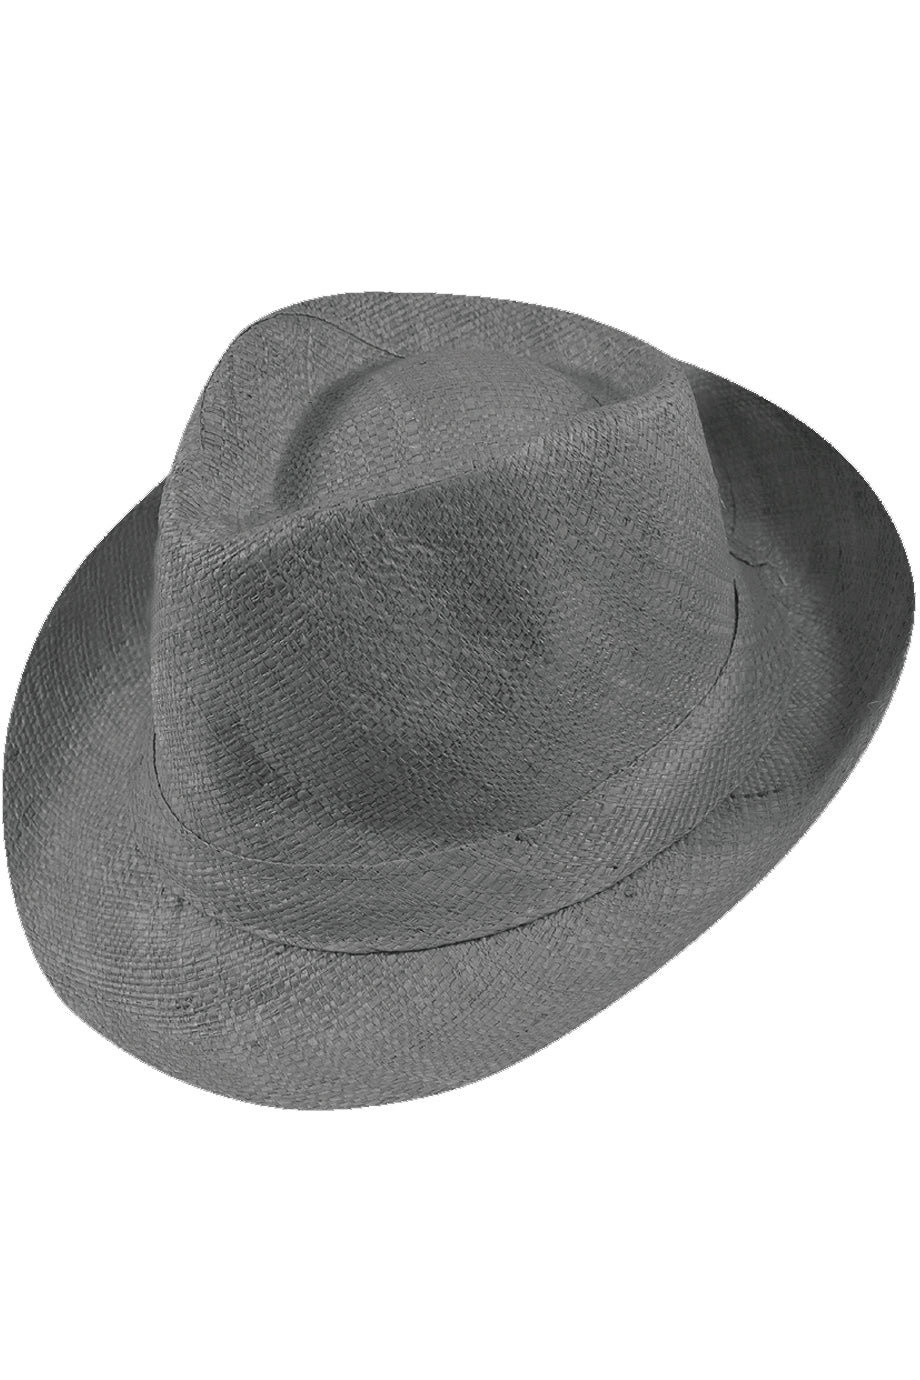 Soretty Gray Handmade Madagascar Hat